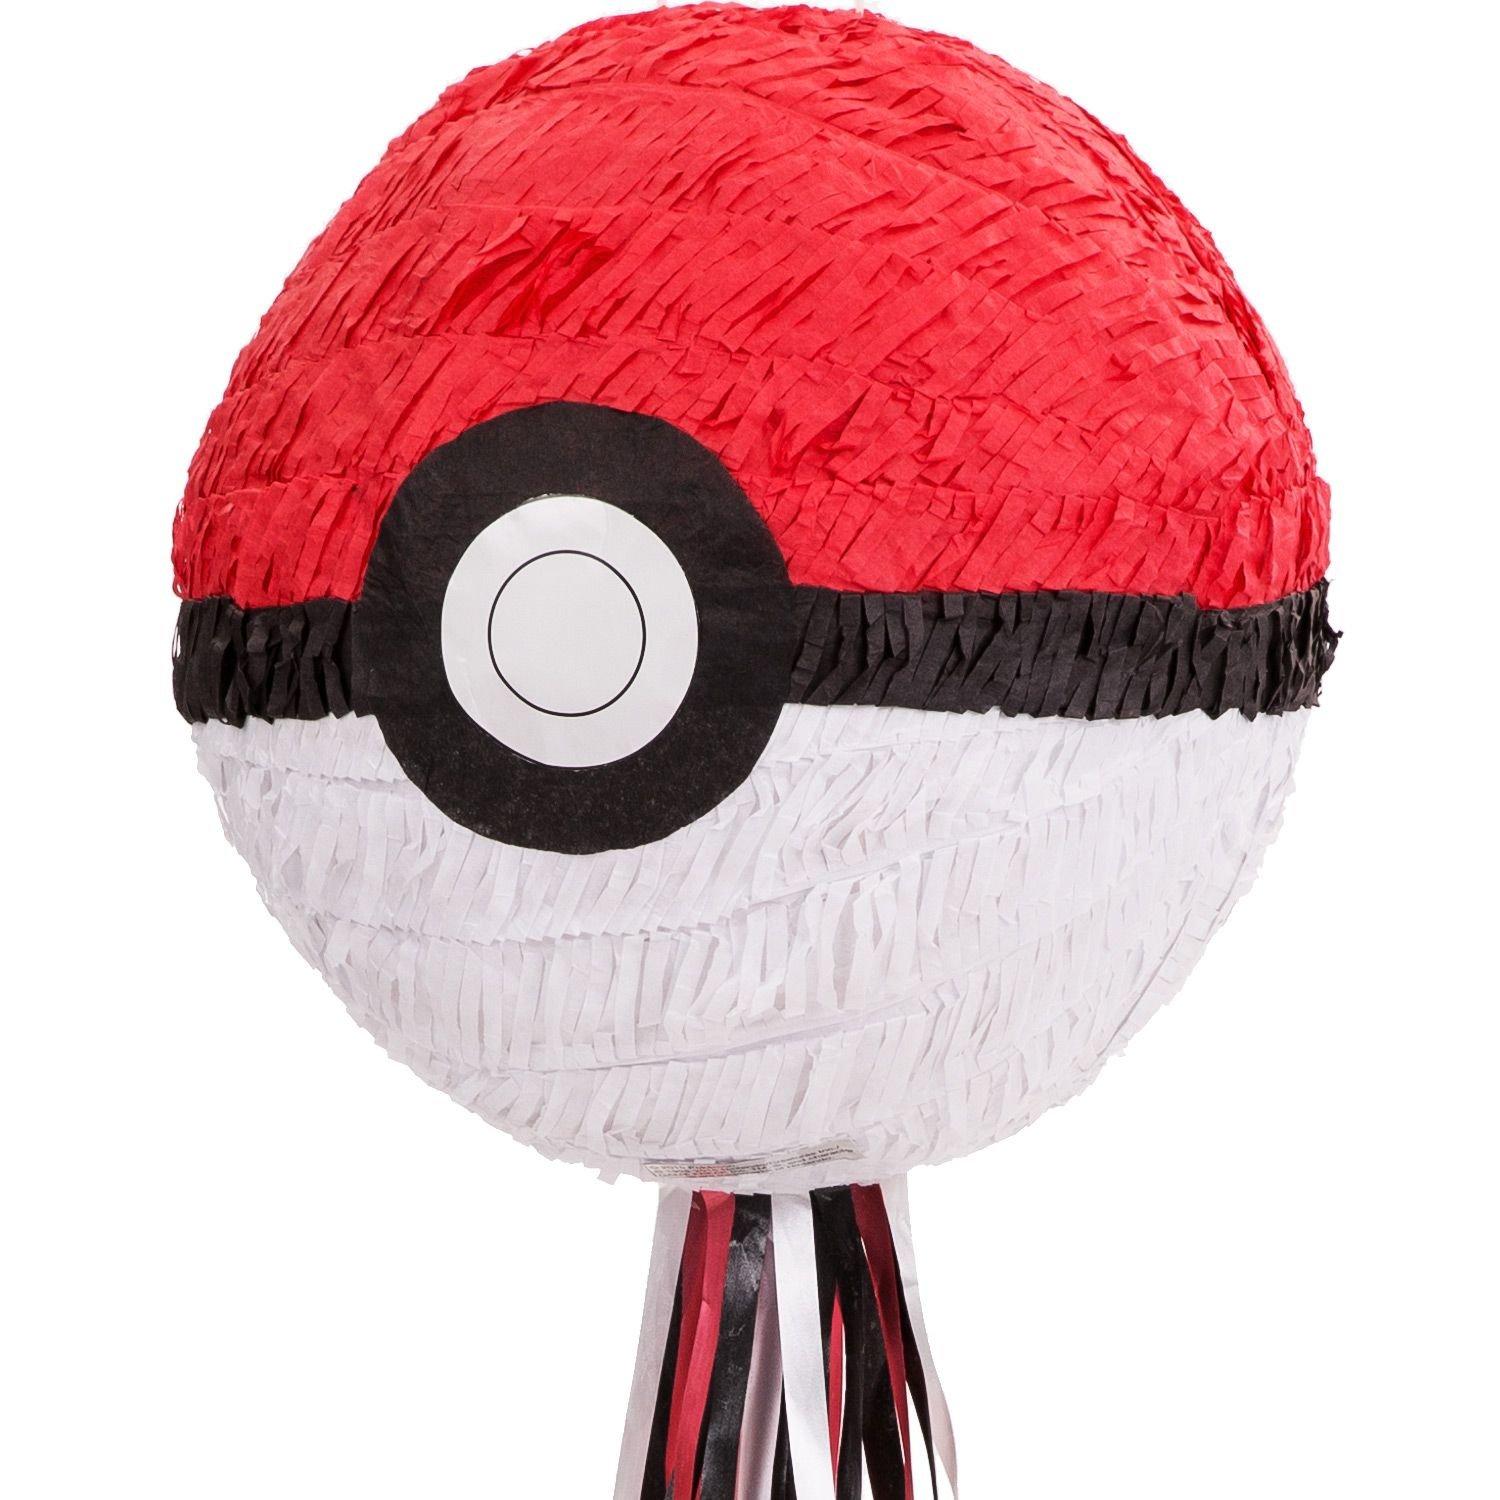 Pull String Poké Ball Pinata 10 3/4in - Pokémon